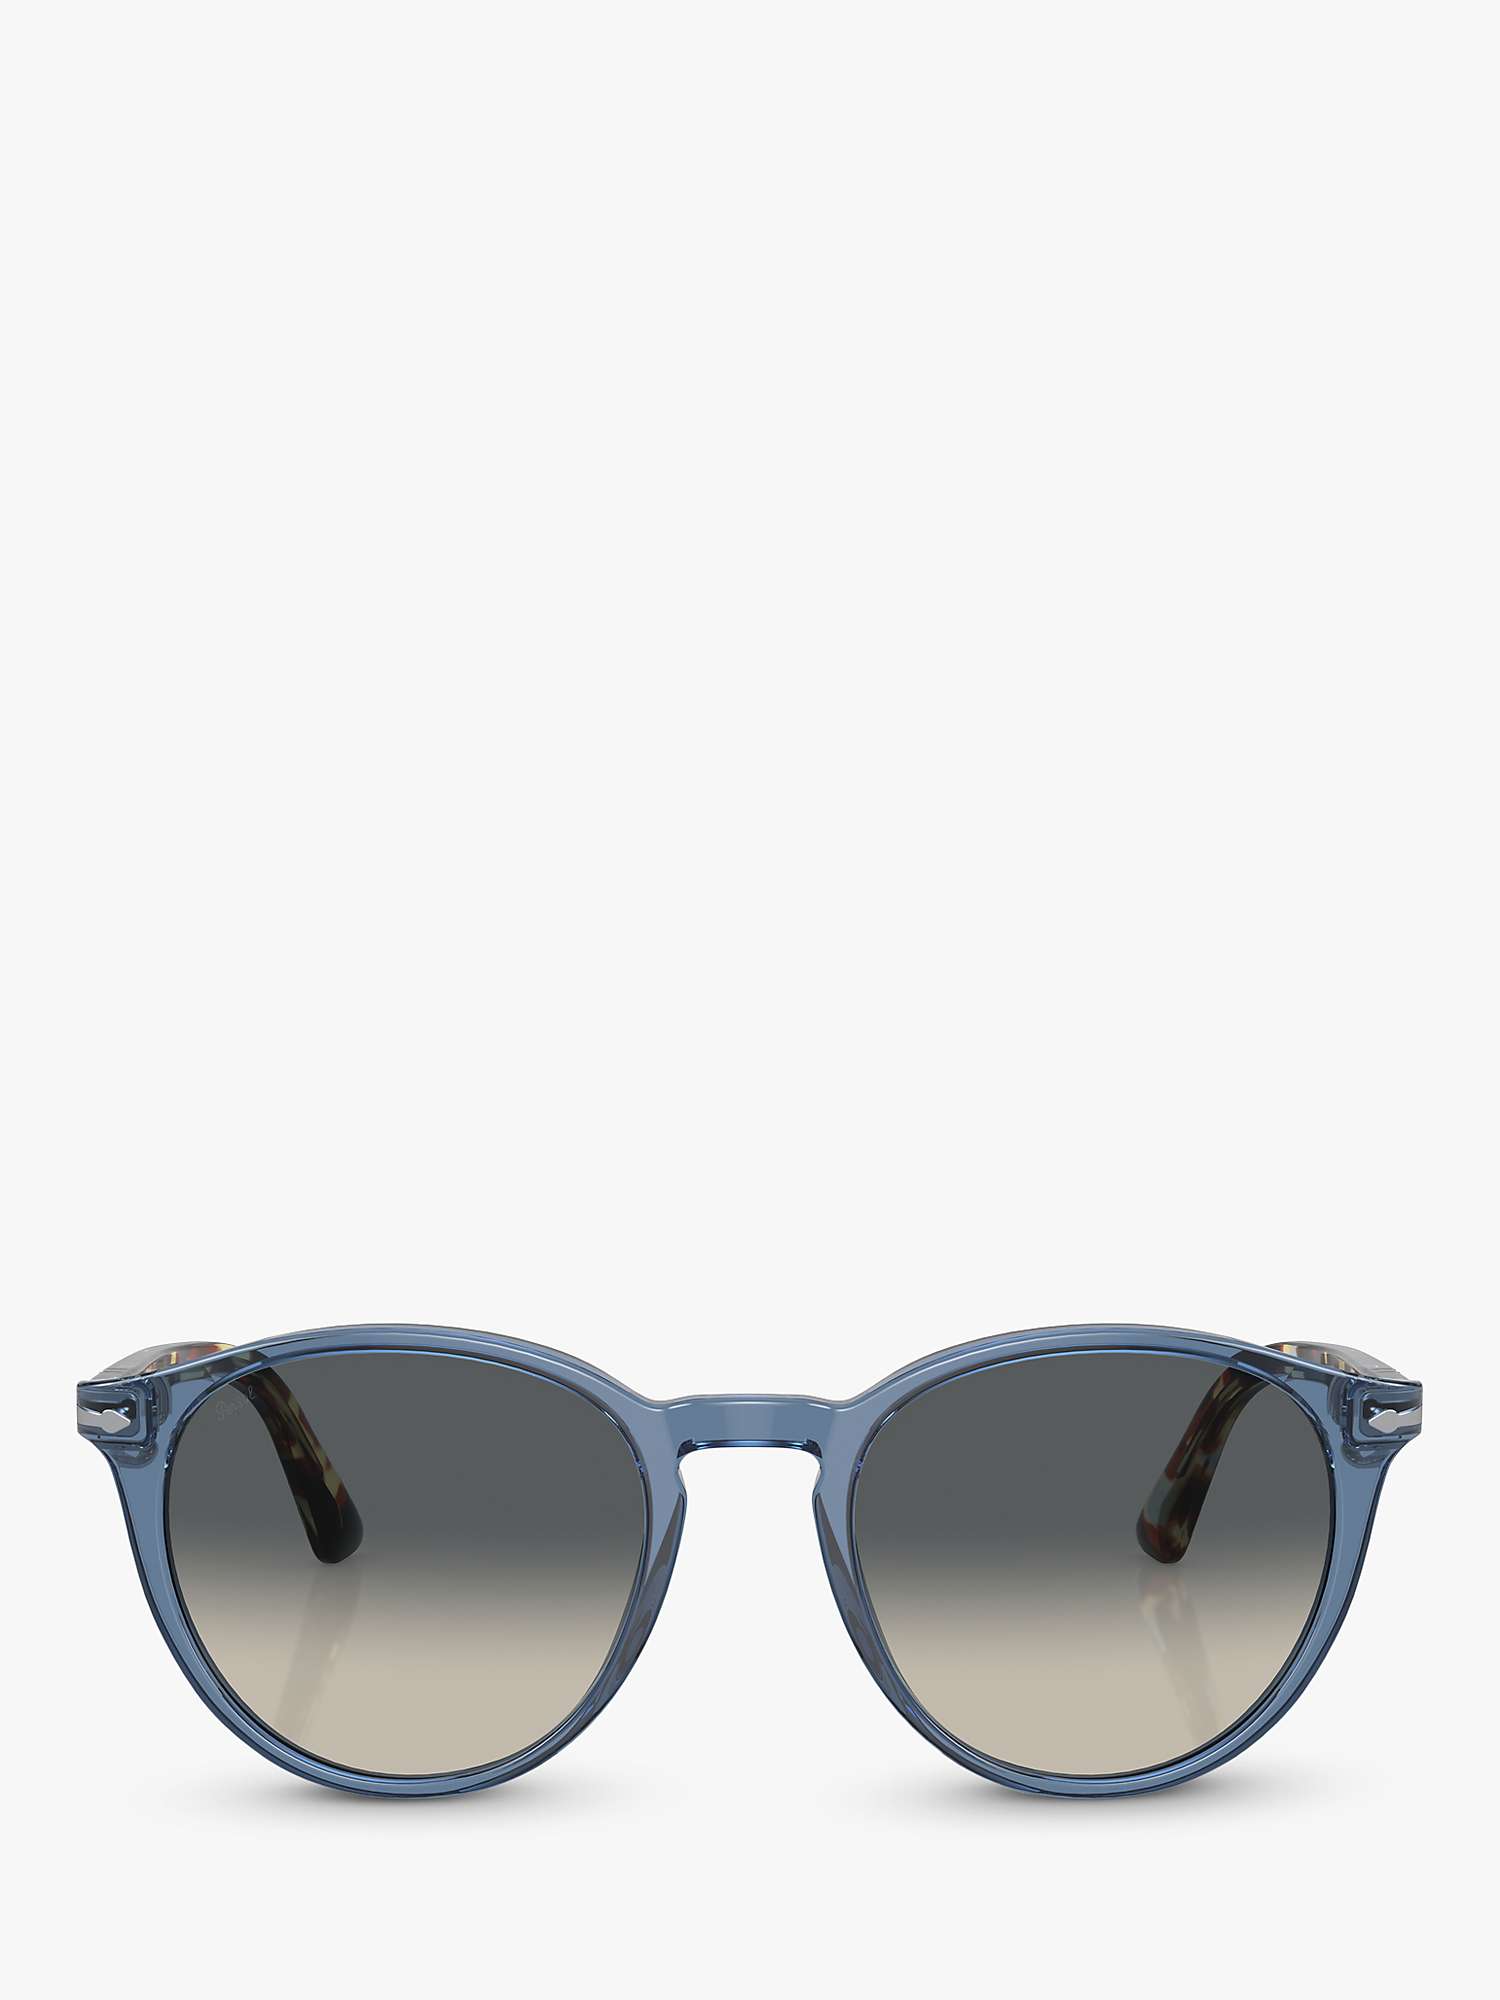 Buy Persol PO3152S Men's Phantos Sunglasses, Transparent Navy/Black Gradient Online at johnlewis.com